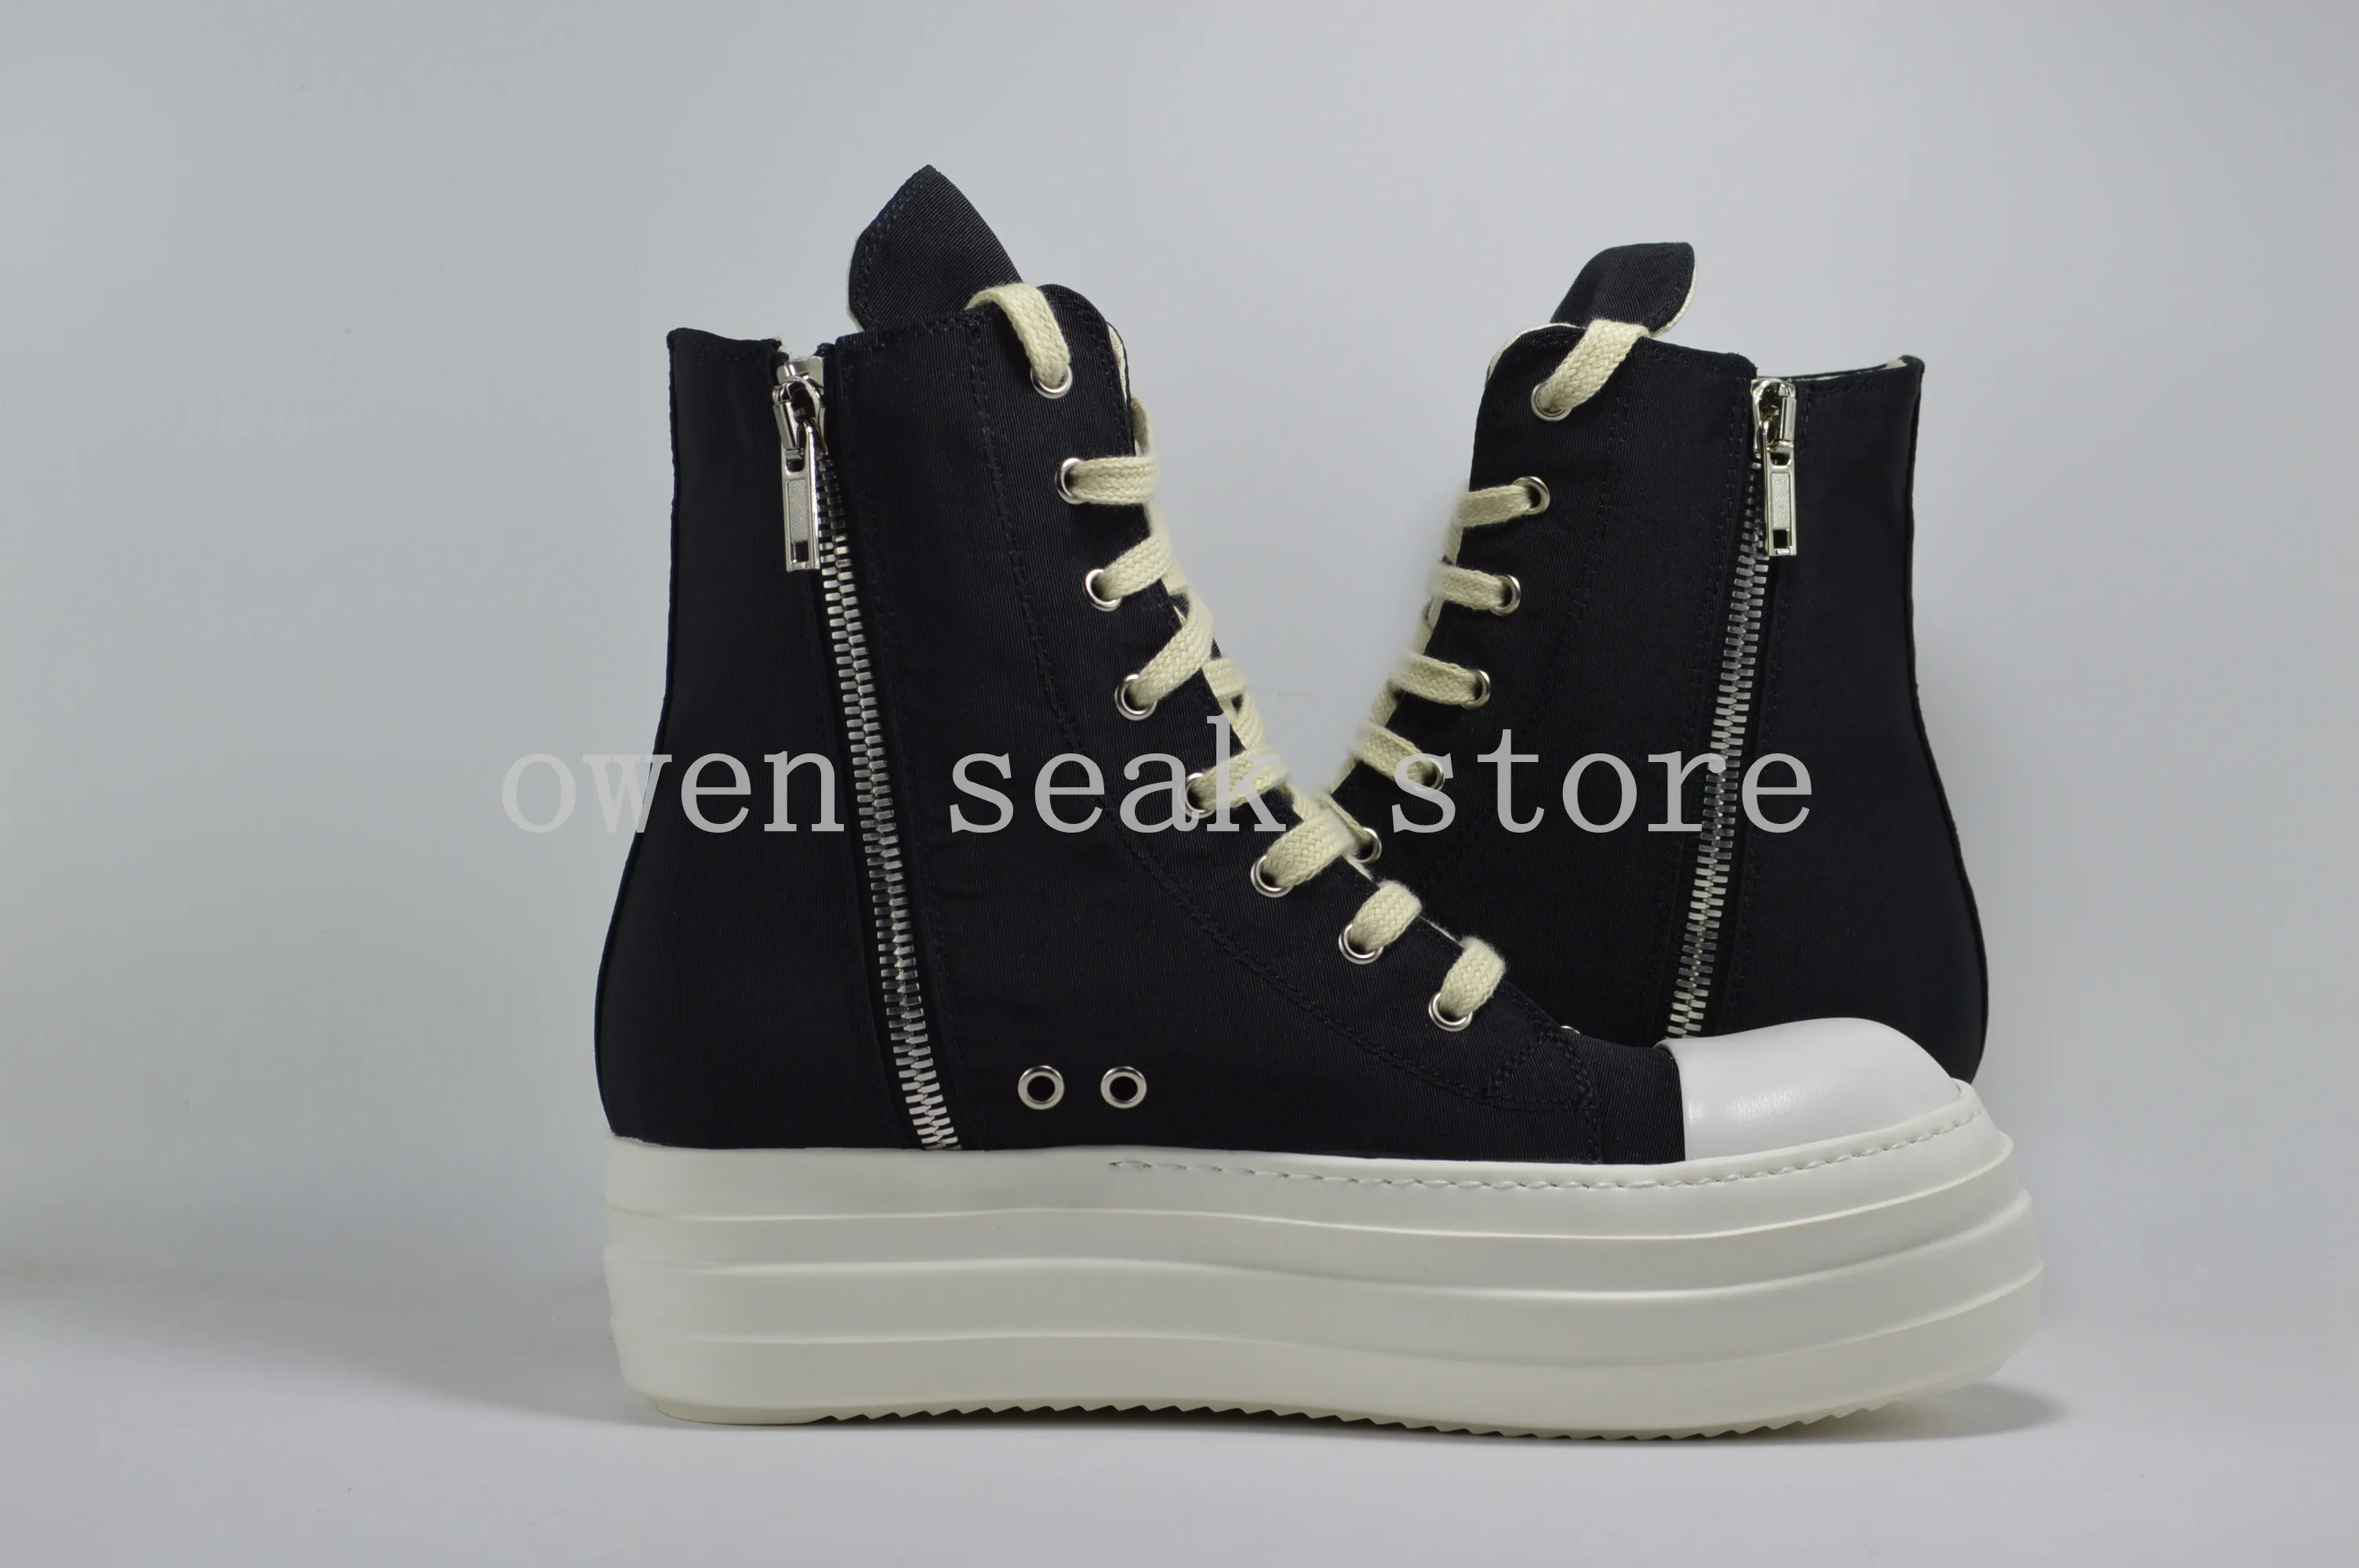  owen seak High-TOP Sneakers for Women Men Casual Canvas Lace  Up Zip Platform Walking Shoes Streetwear Black Boots | Fashion Sneakers